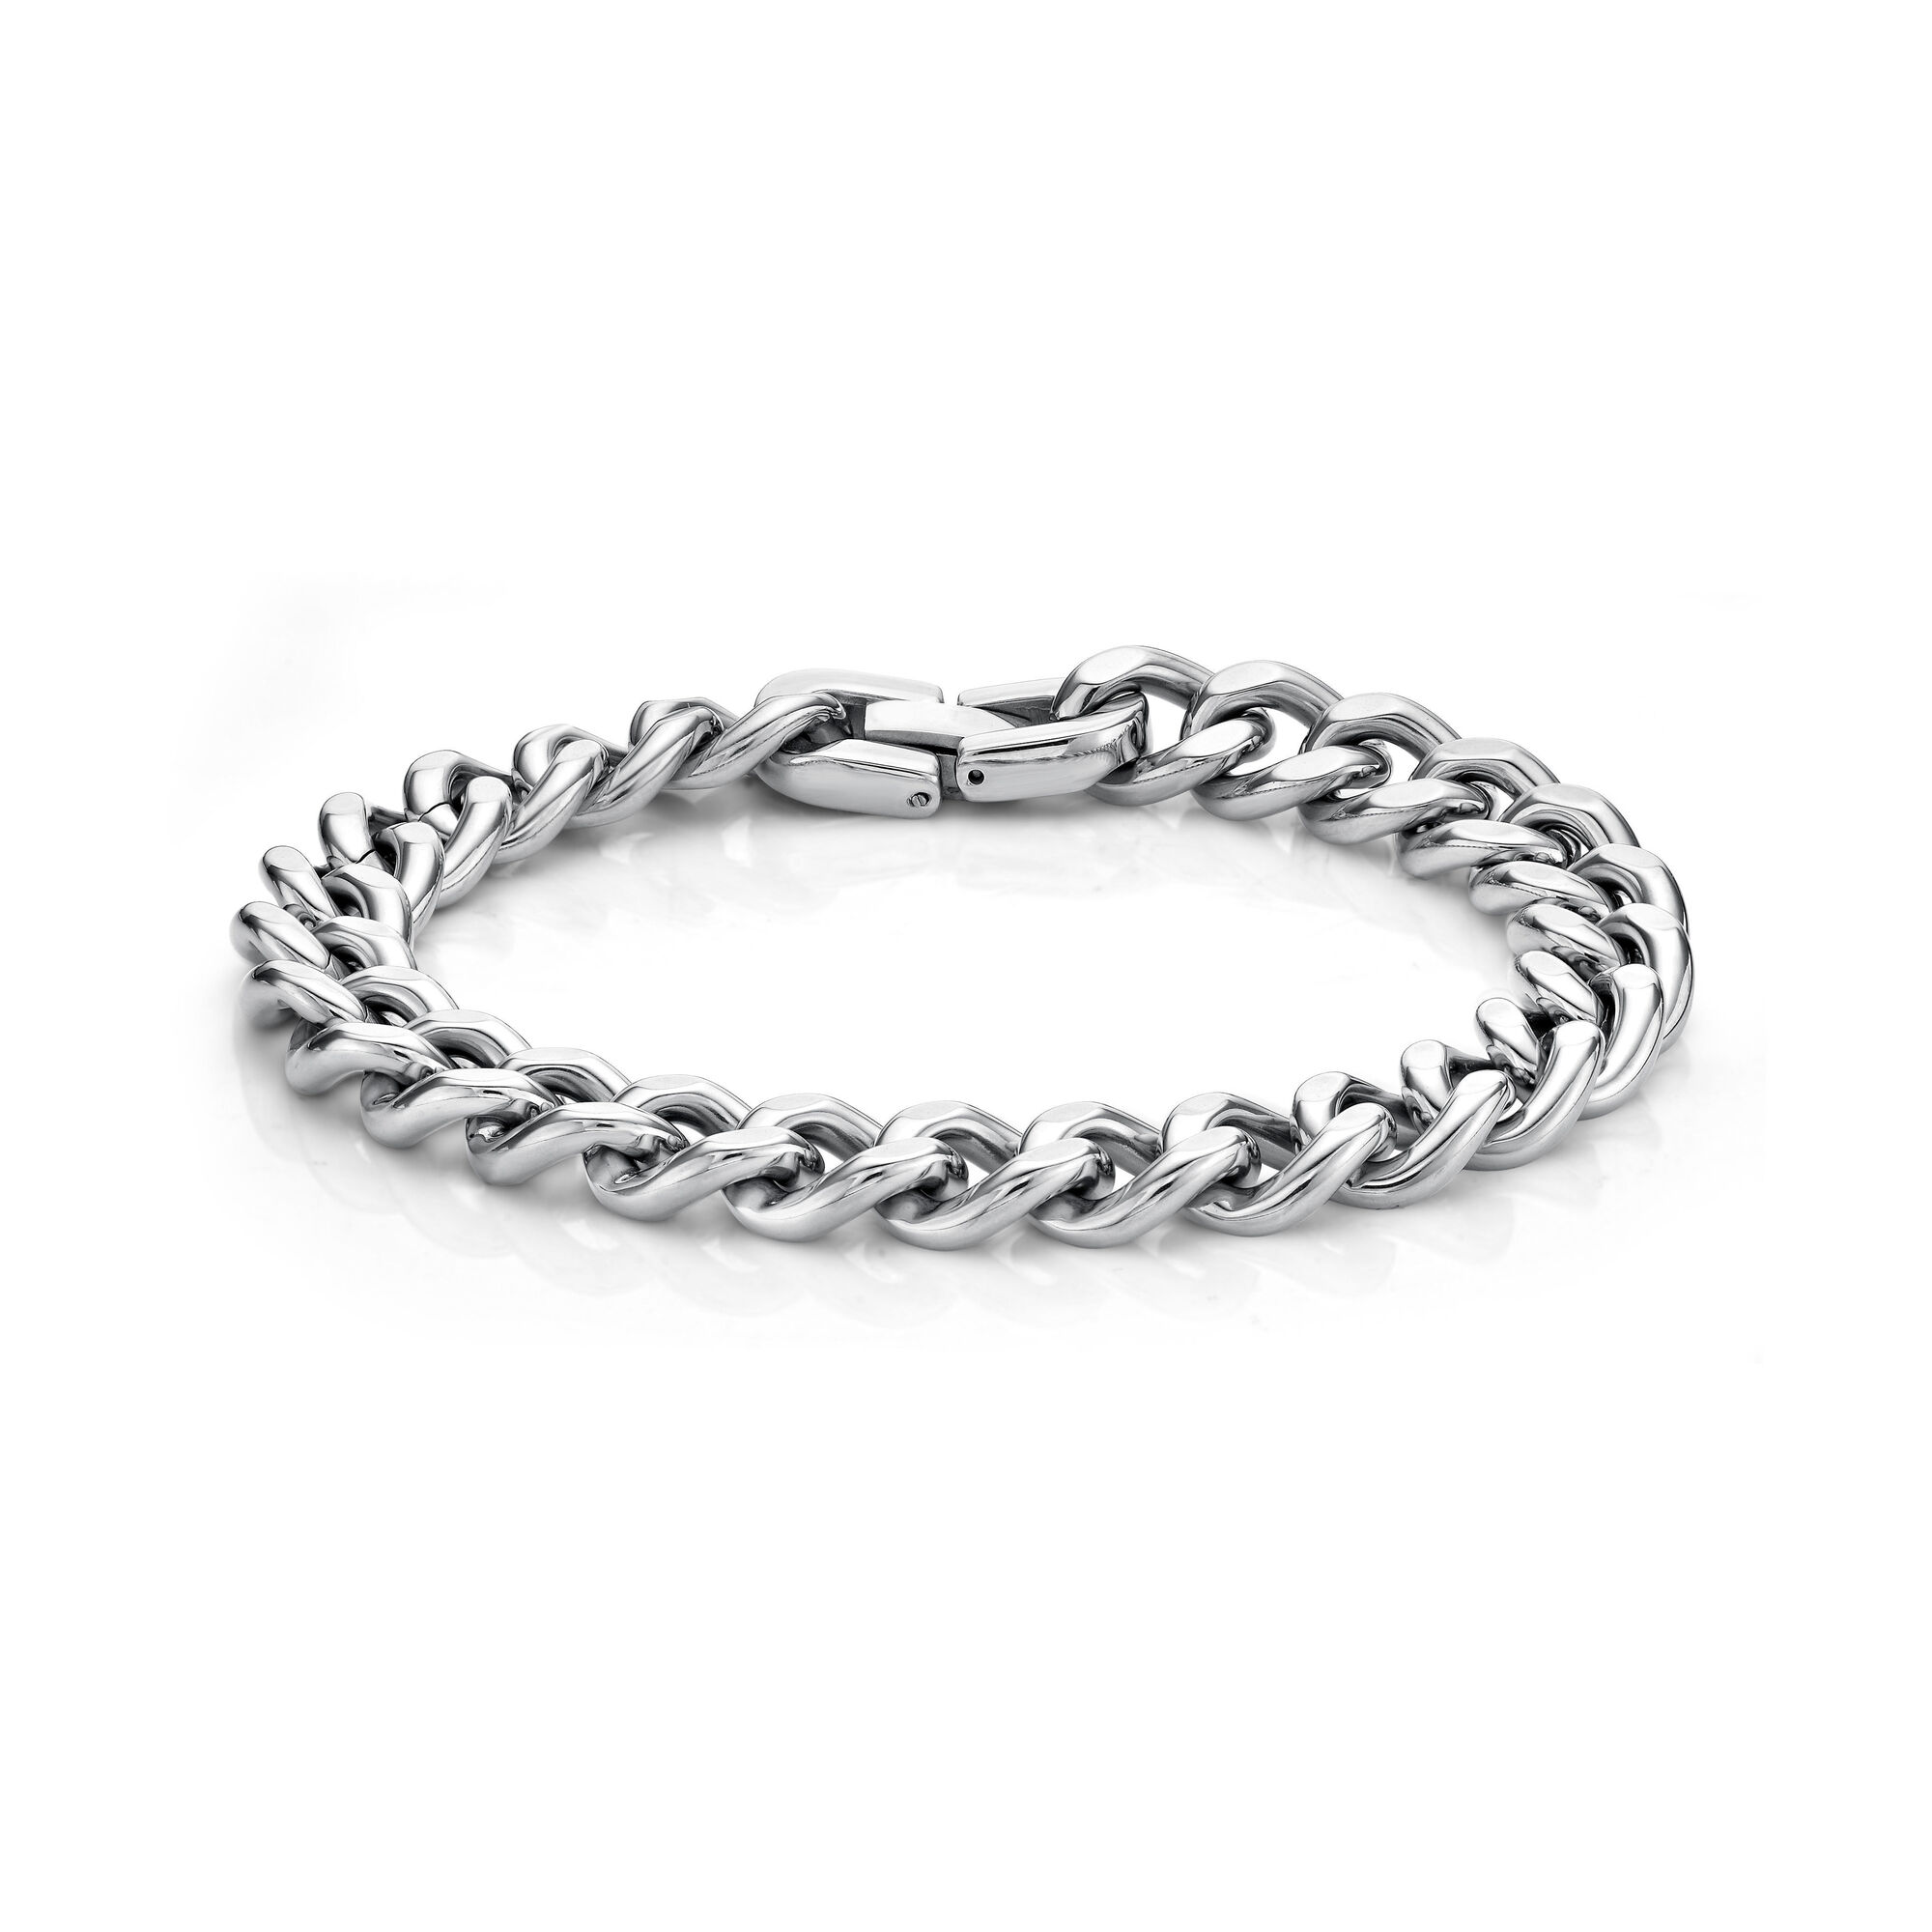 45051-bracelet-mens-collection-stainless-steel-45051.jpg